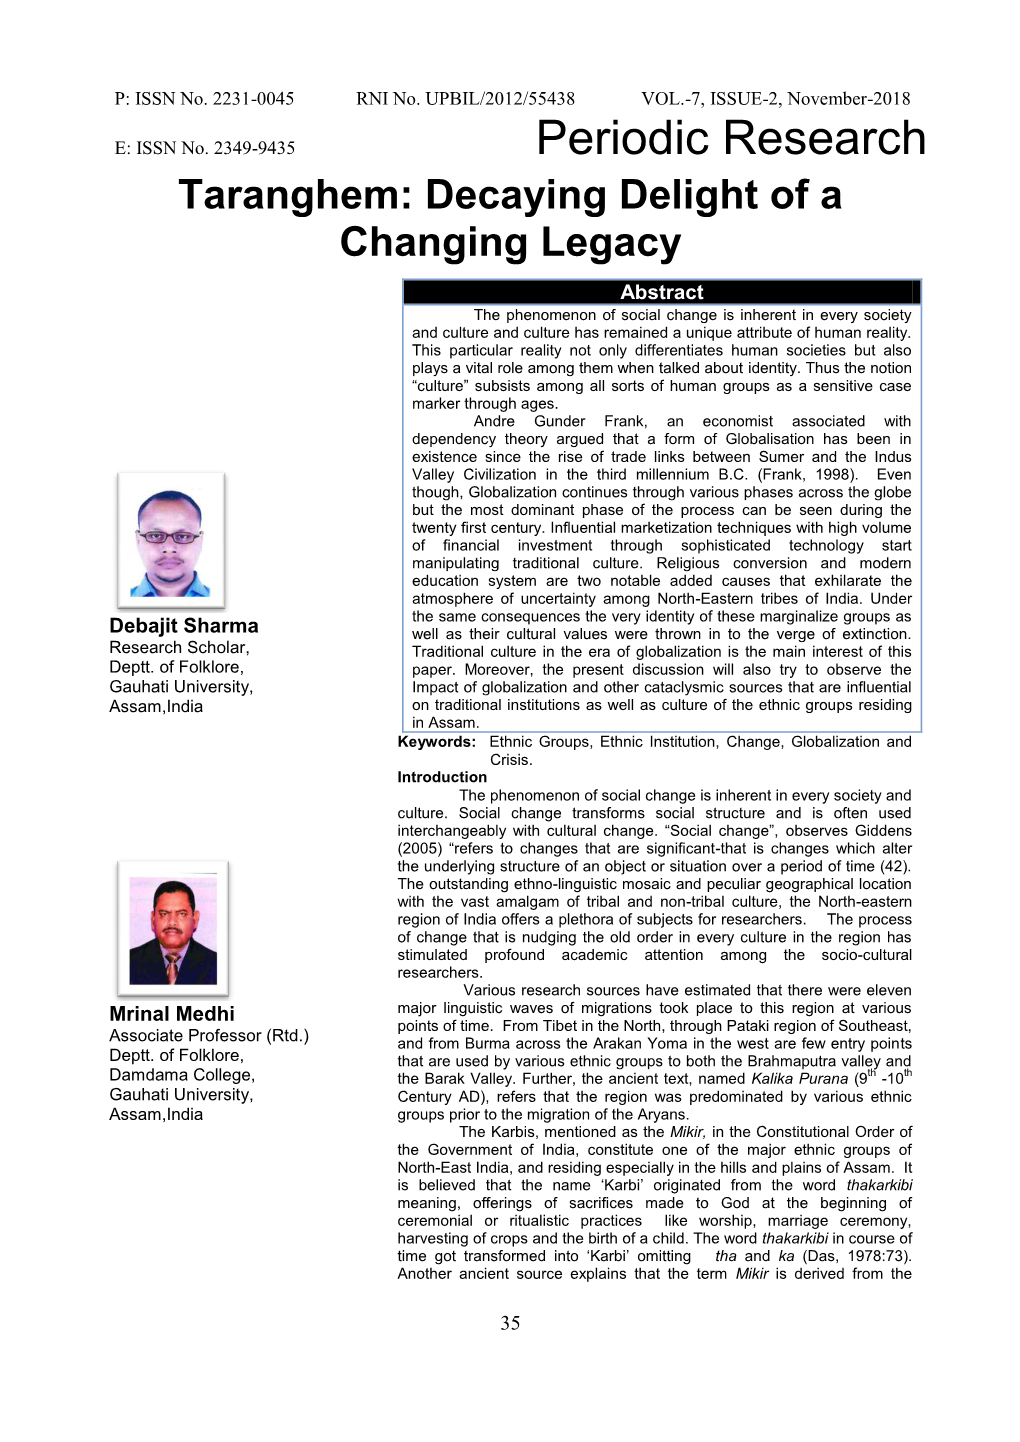 Taranghem: Decaying Delight of a Changing Legacy Debajit Sharma & Mrinal Medhi, Assam, India